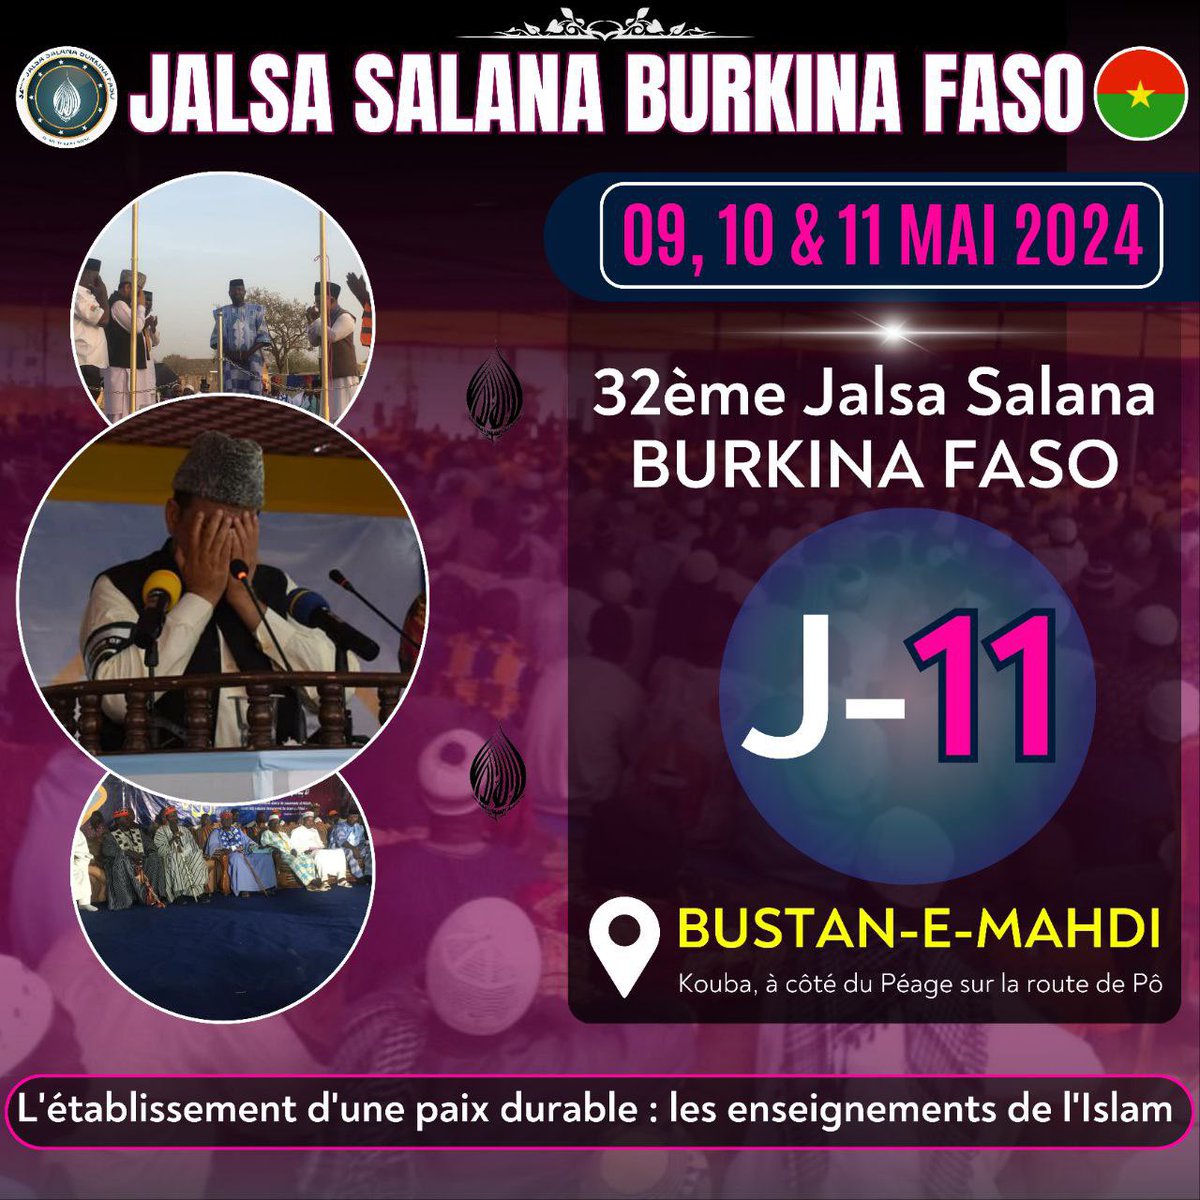 32ème Jalsa Salana Burkina Faso 09 au 11 mai 2024 Thème : Etablissement d'une Paix Durable : Les Enseignements de l'Islam Lieu: Bustan e Mahdi Kouba (sur l'axe Ouagadougou - Pô, la sortie du péage). #jalsa #islam #Ahmadiyya #Burkina_Faso